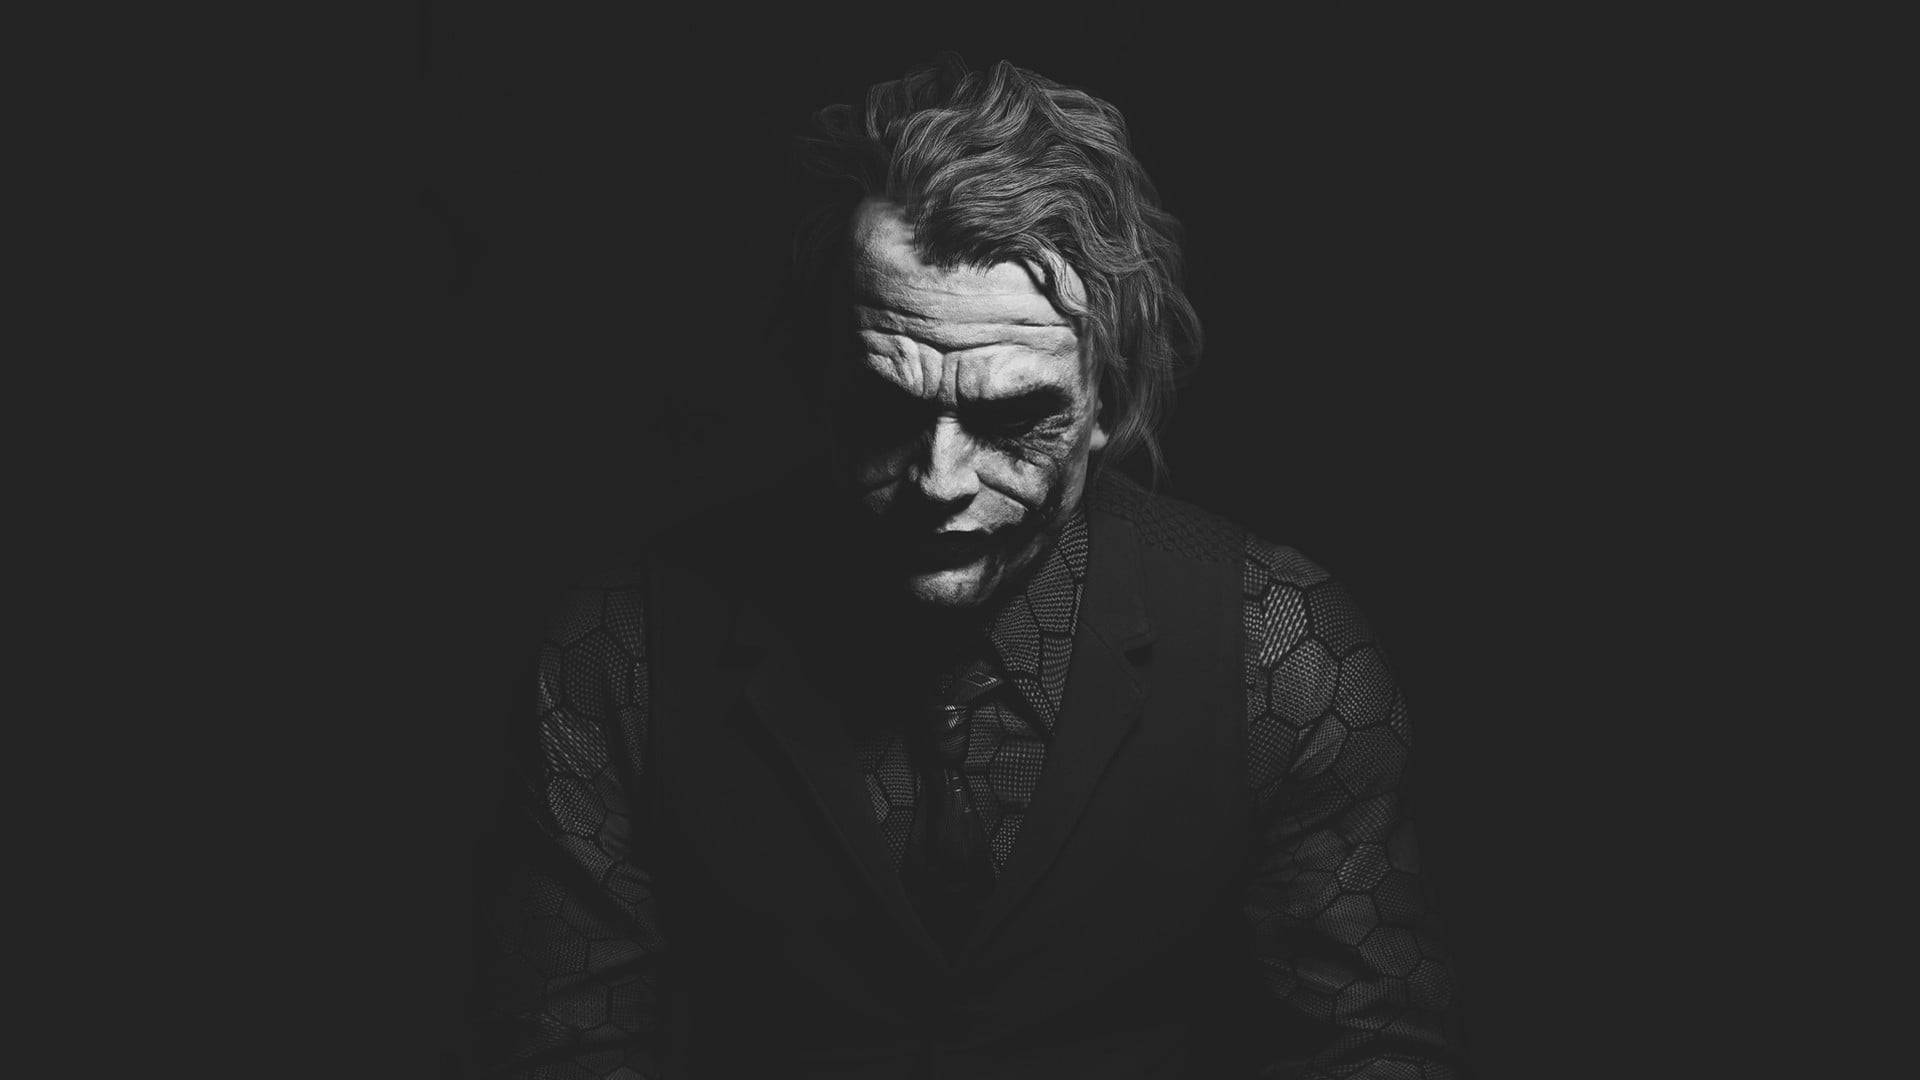 Grayscale Digital Art Heath Ledger Joker Wallpaper